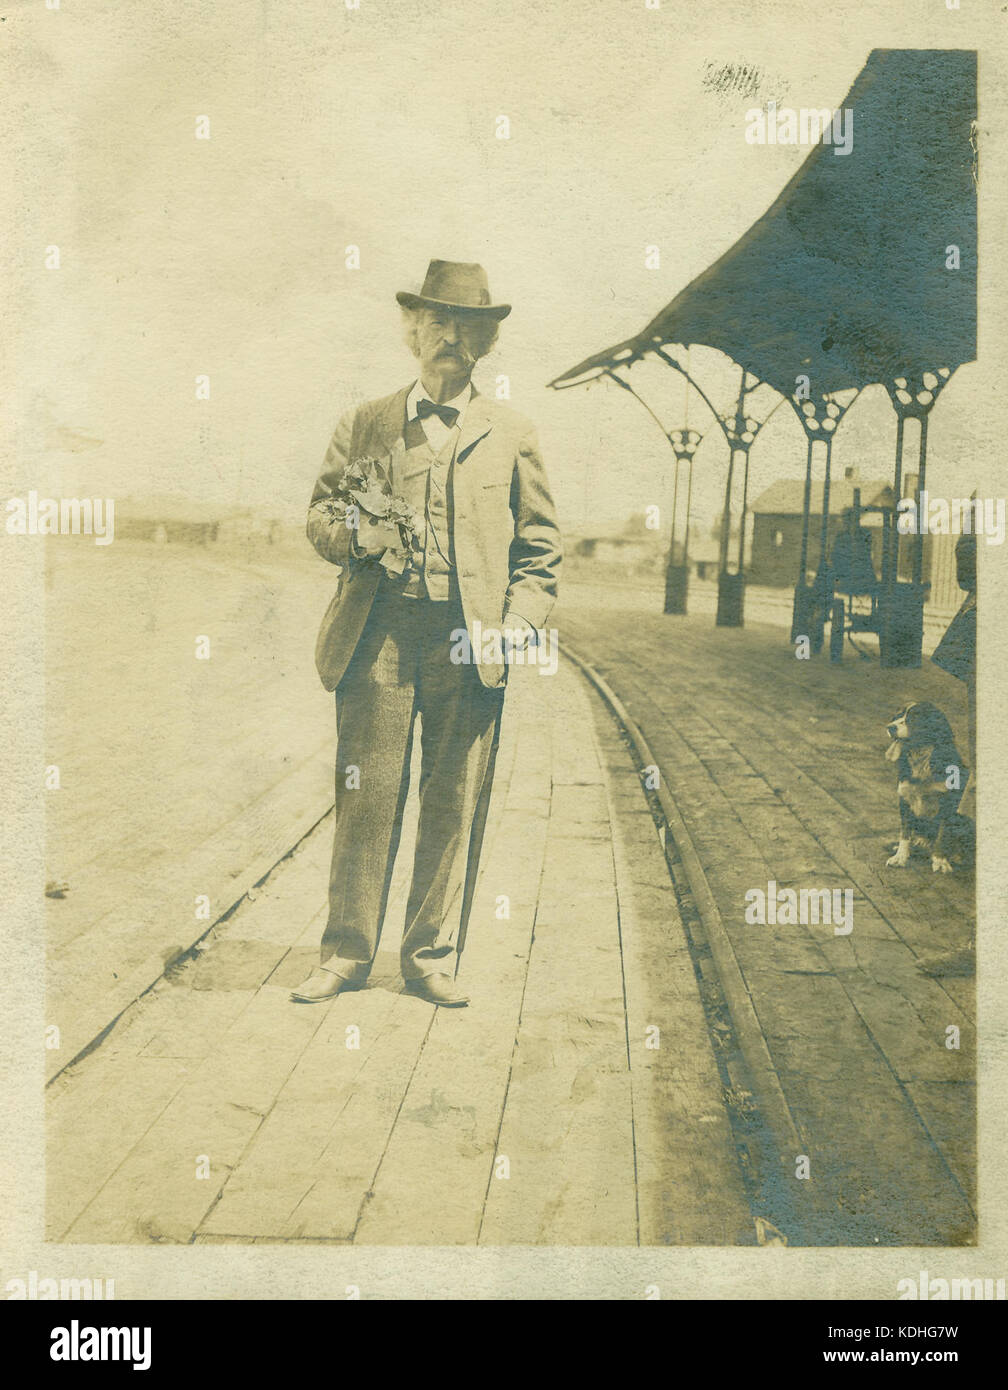 Samuel Clemens at Union Station, Hannibal, Missouri, June 3, 1902 Stock Photo